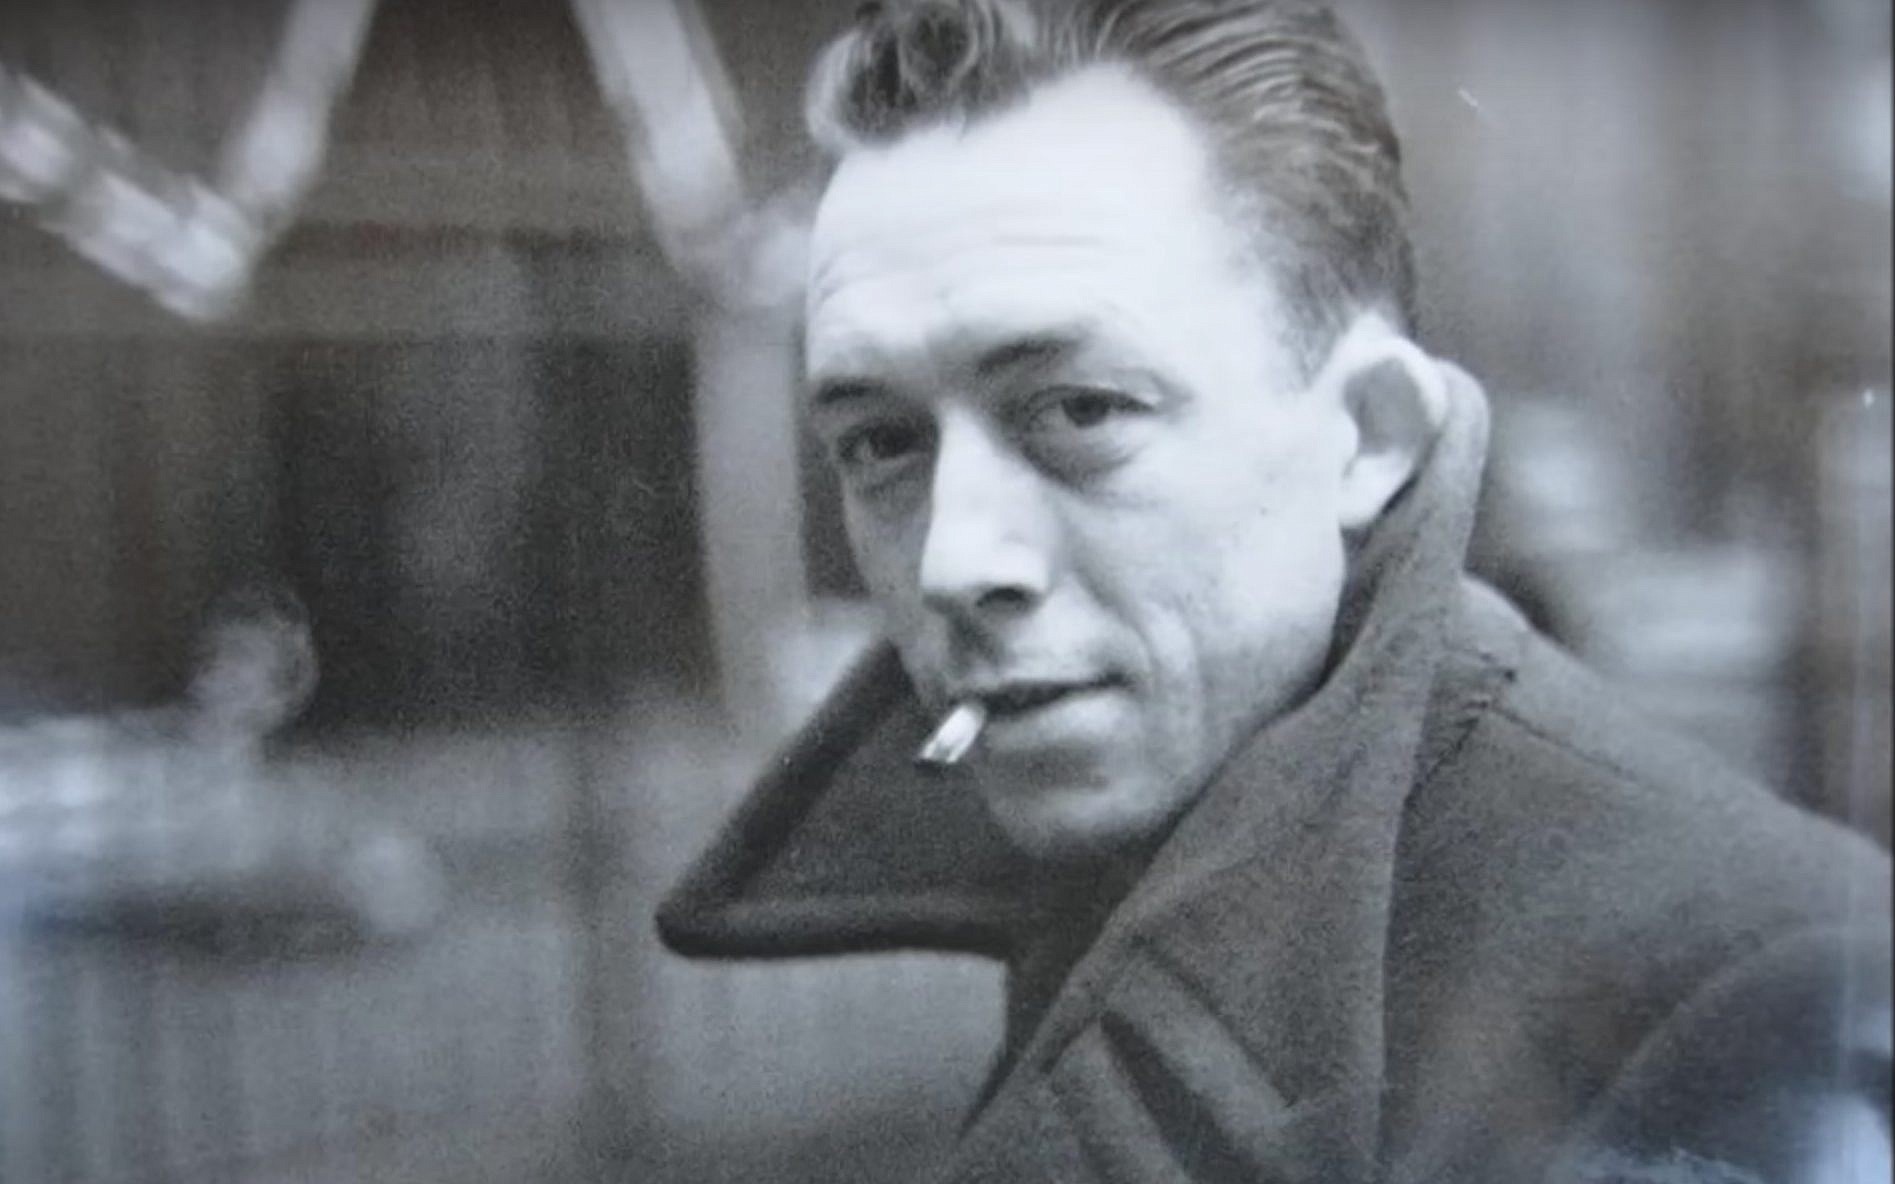 Updated) Albert Camus – Maria Casarès Correspondence: Gallimard